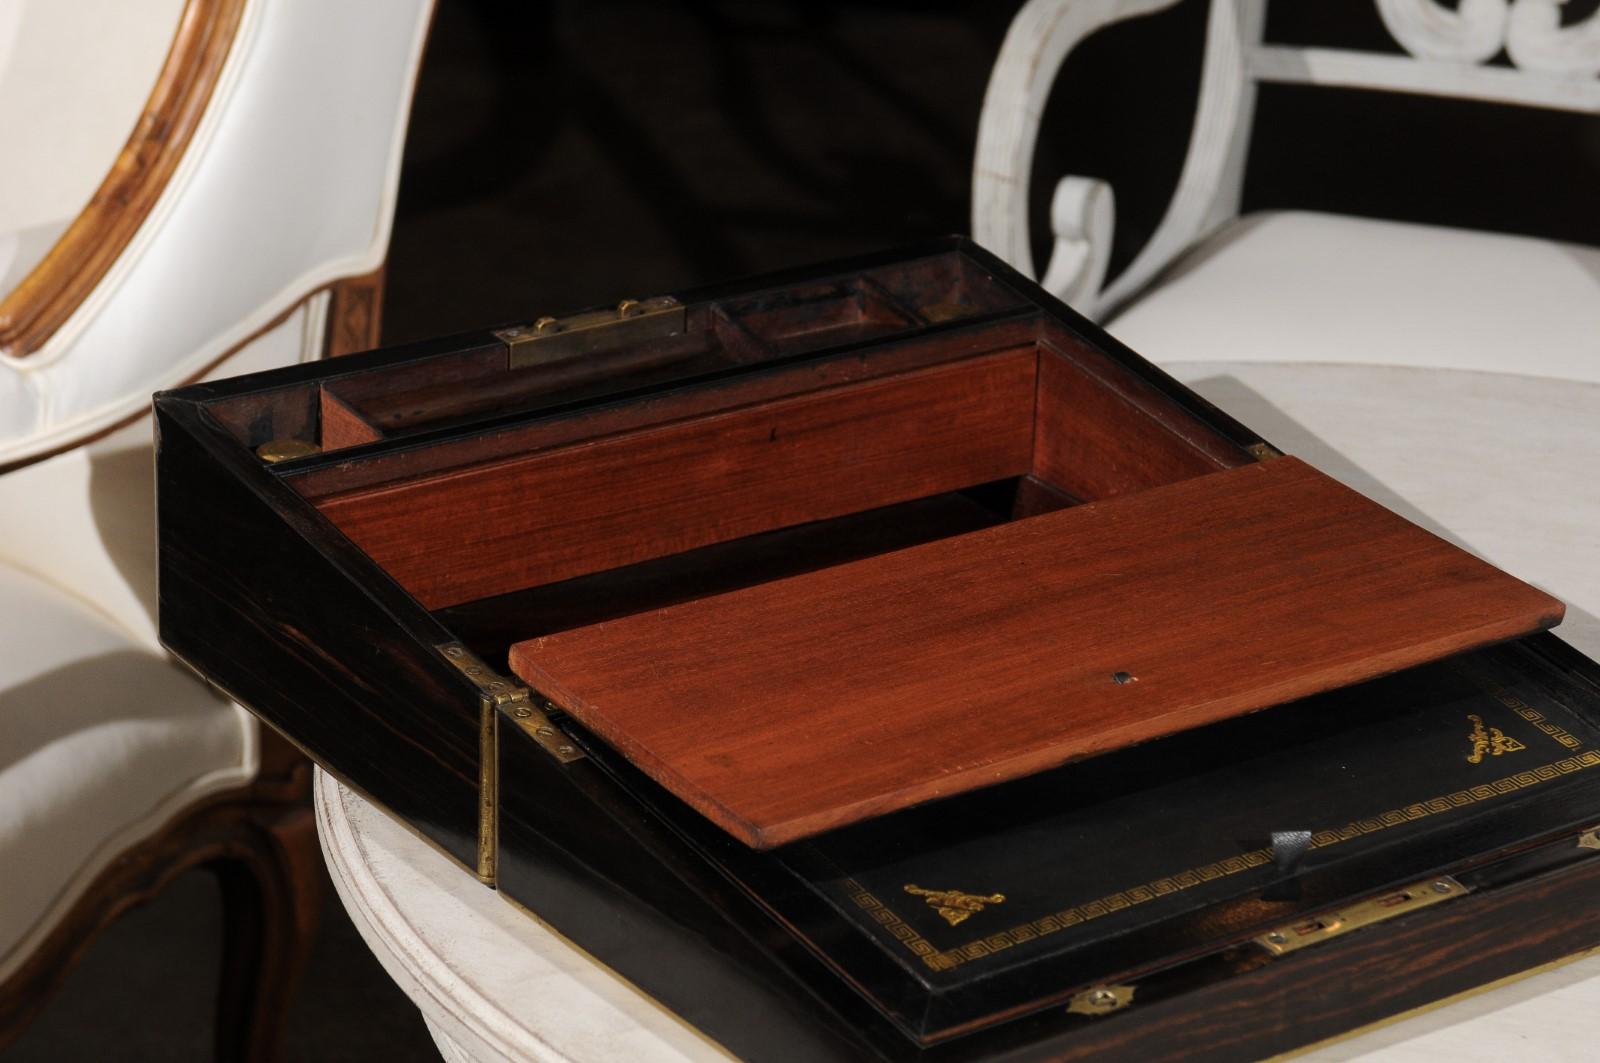 Coromandel 19th Century Brass-Bound Campaign Slope Desk with Secret Drawers 2